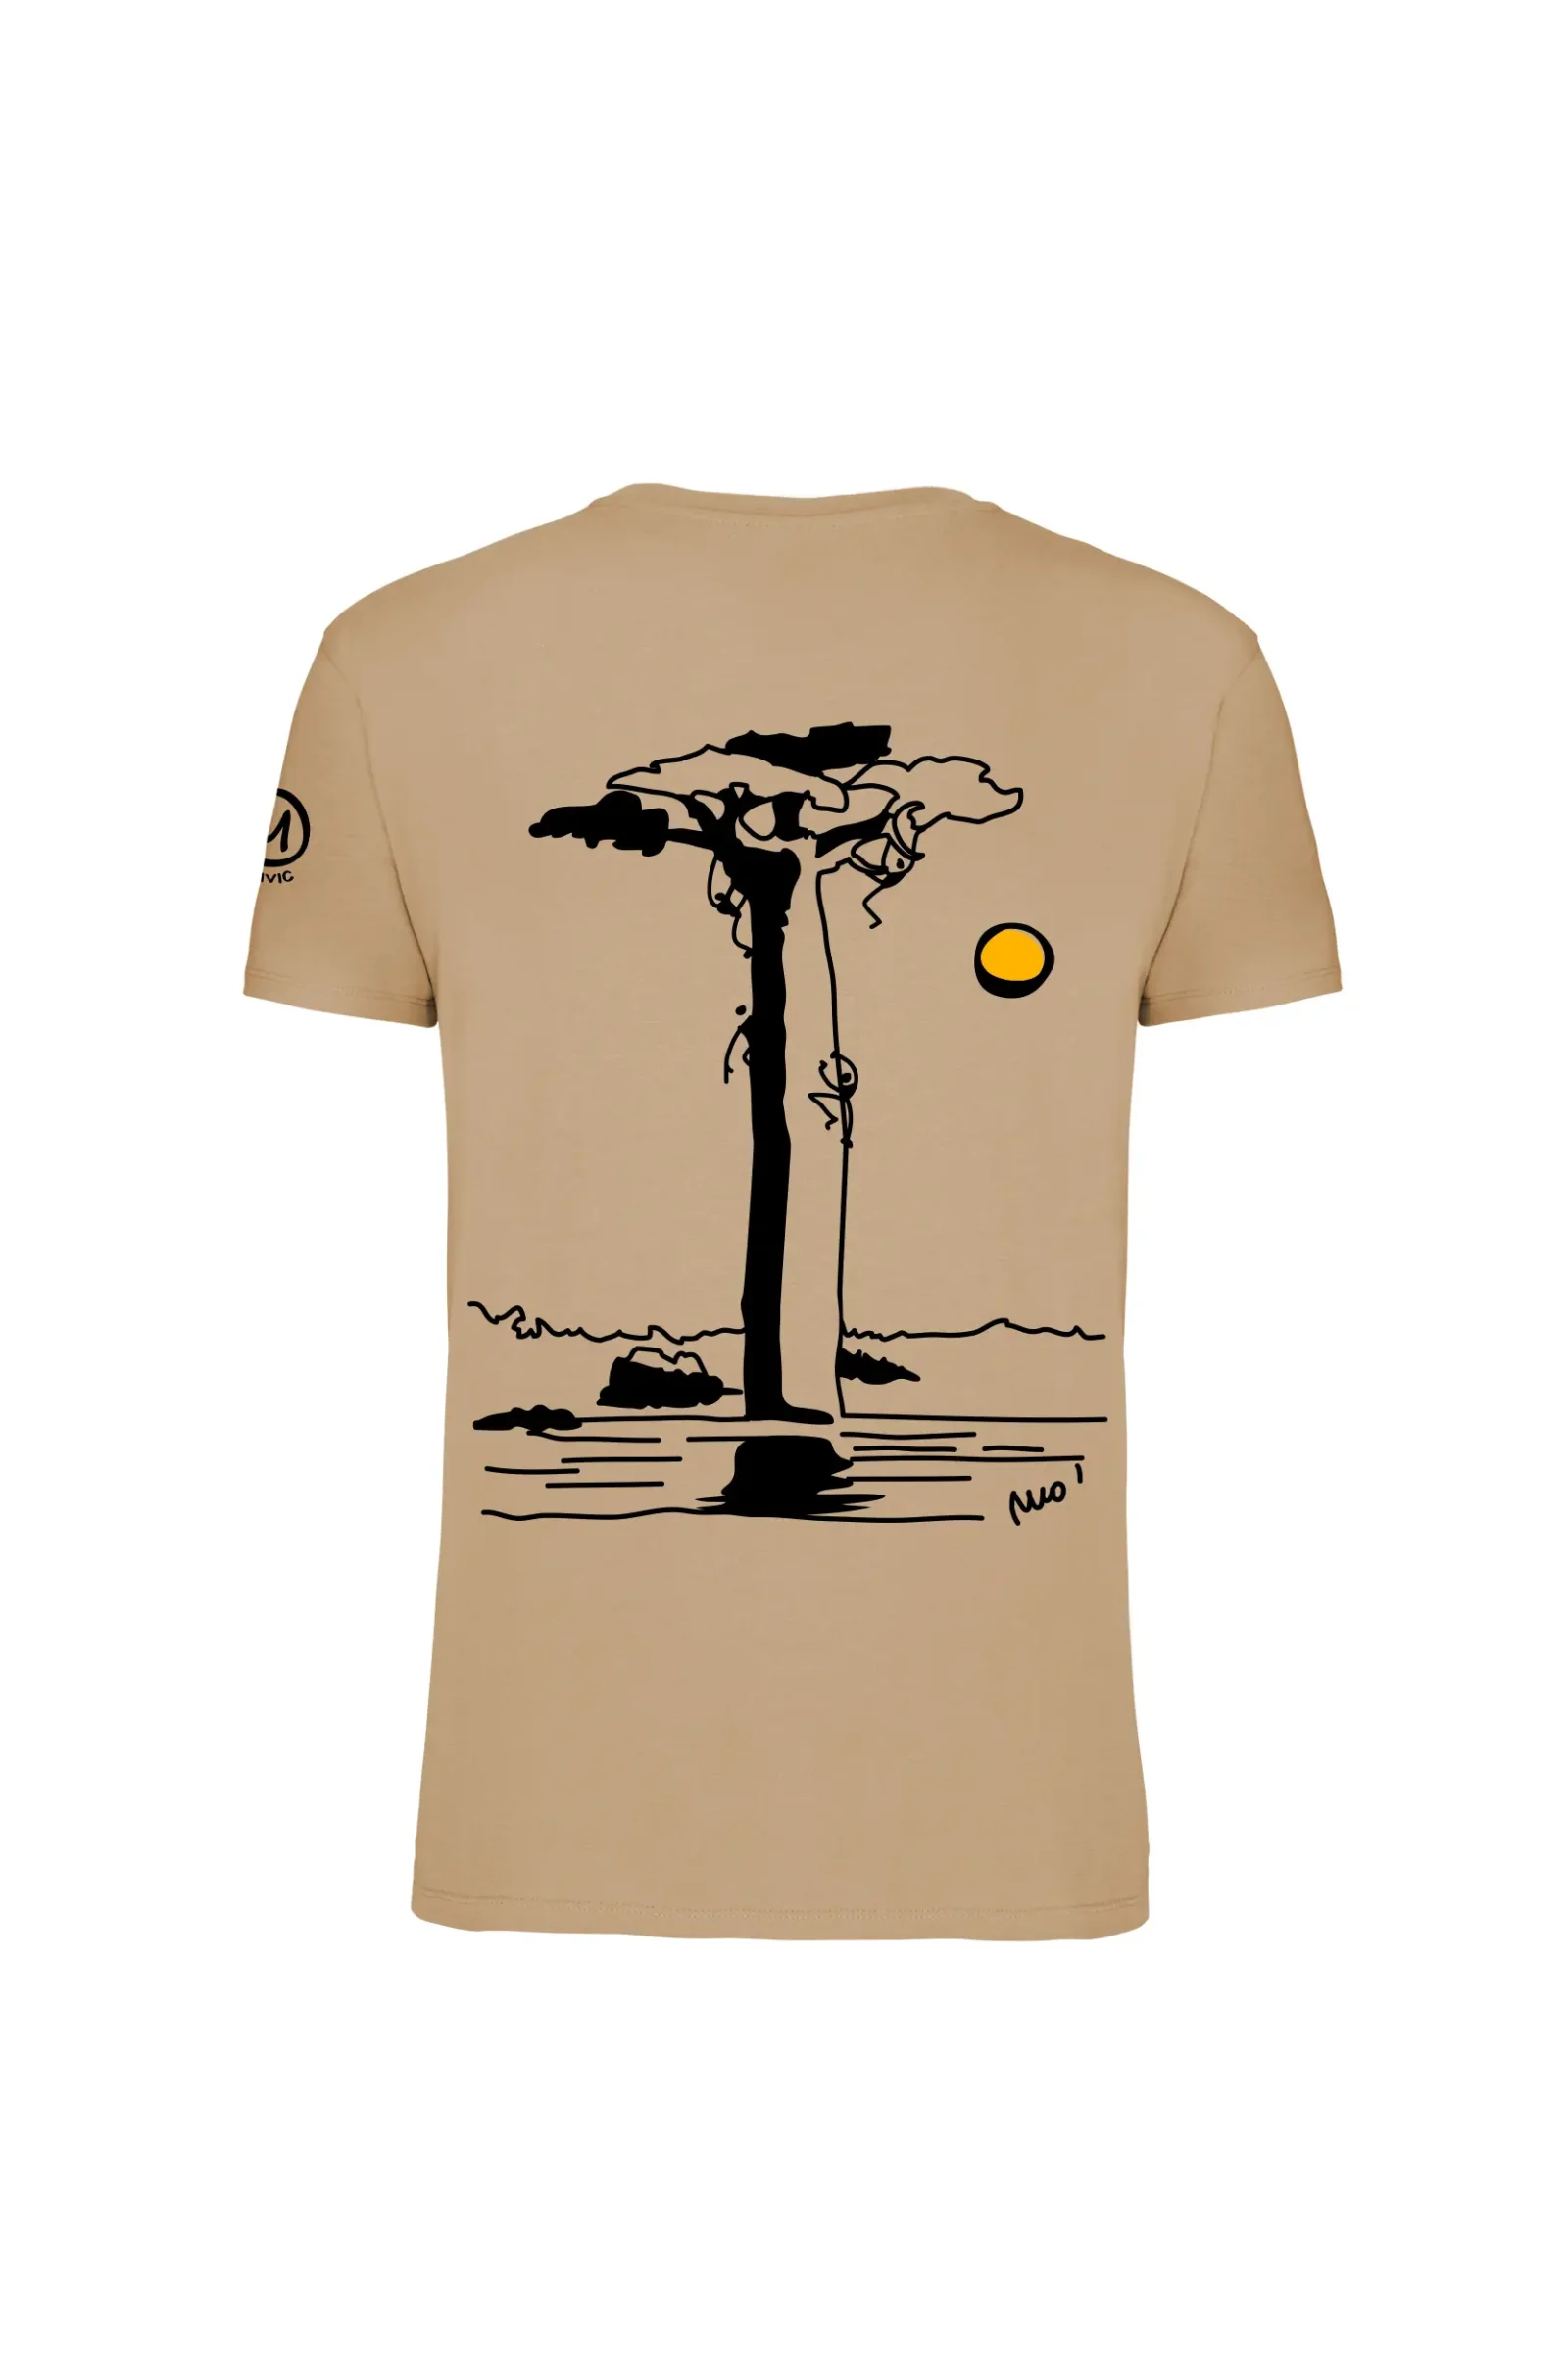 Men's climbing t-shirt - sand organic cotton - "Baobab" - HASH ORGANIC MONVIC